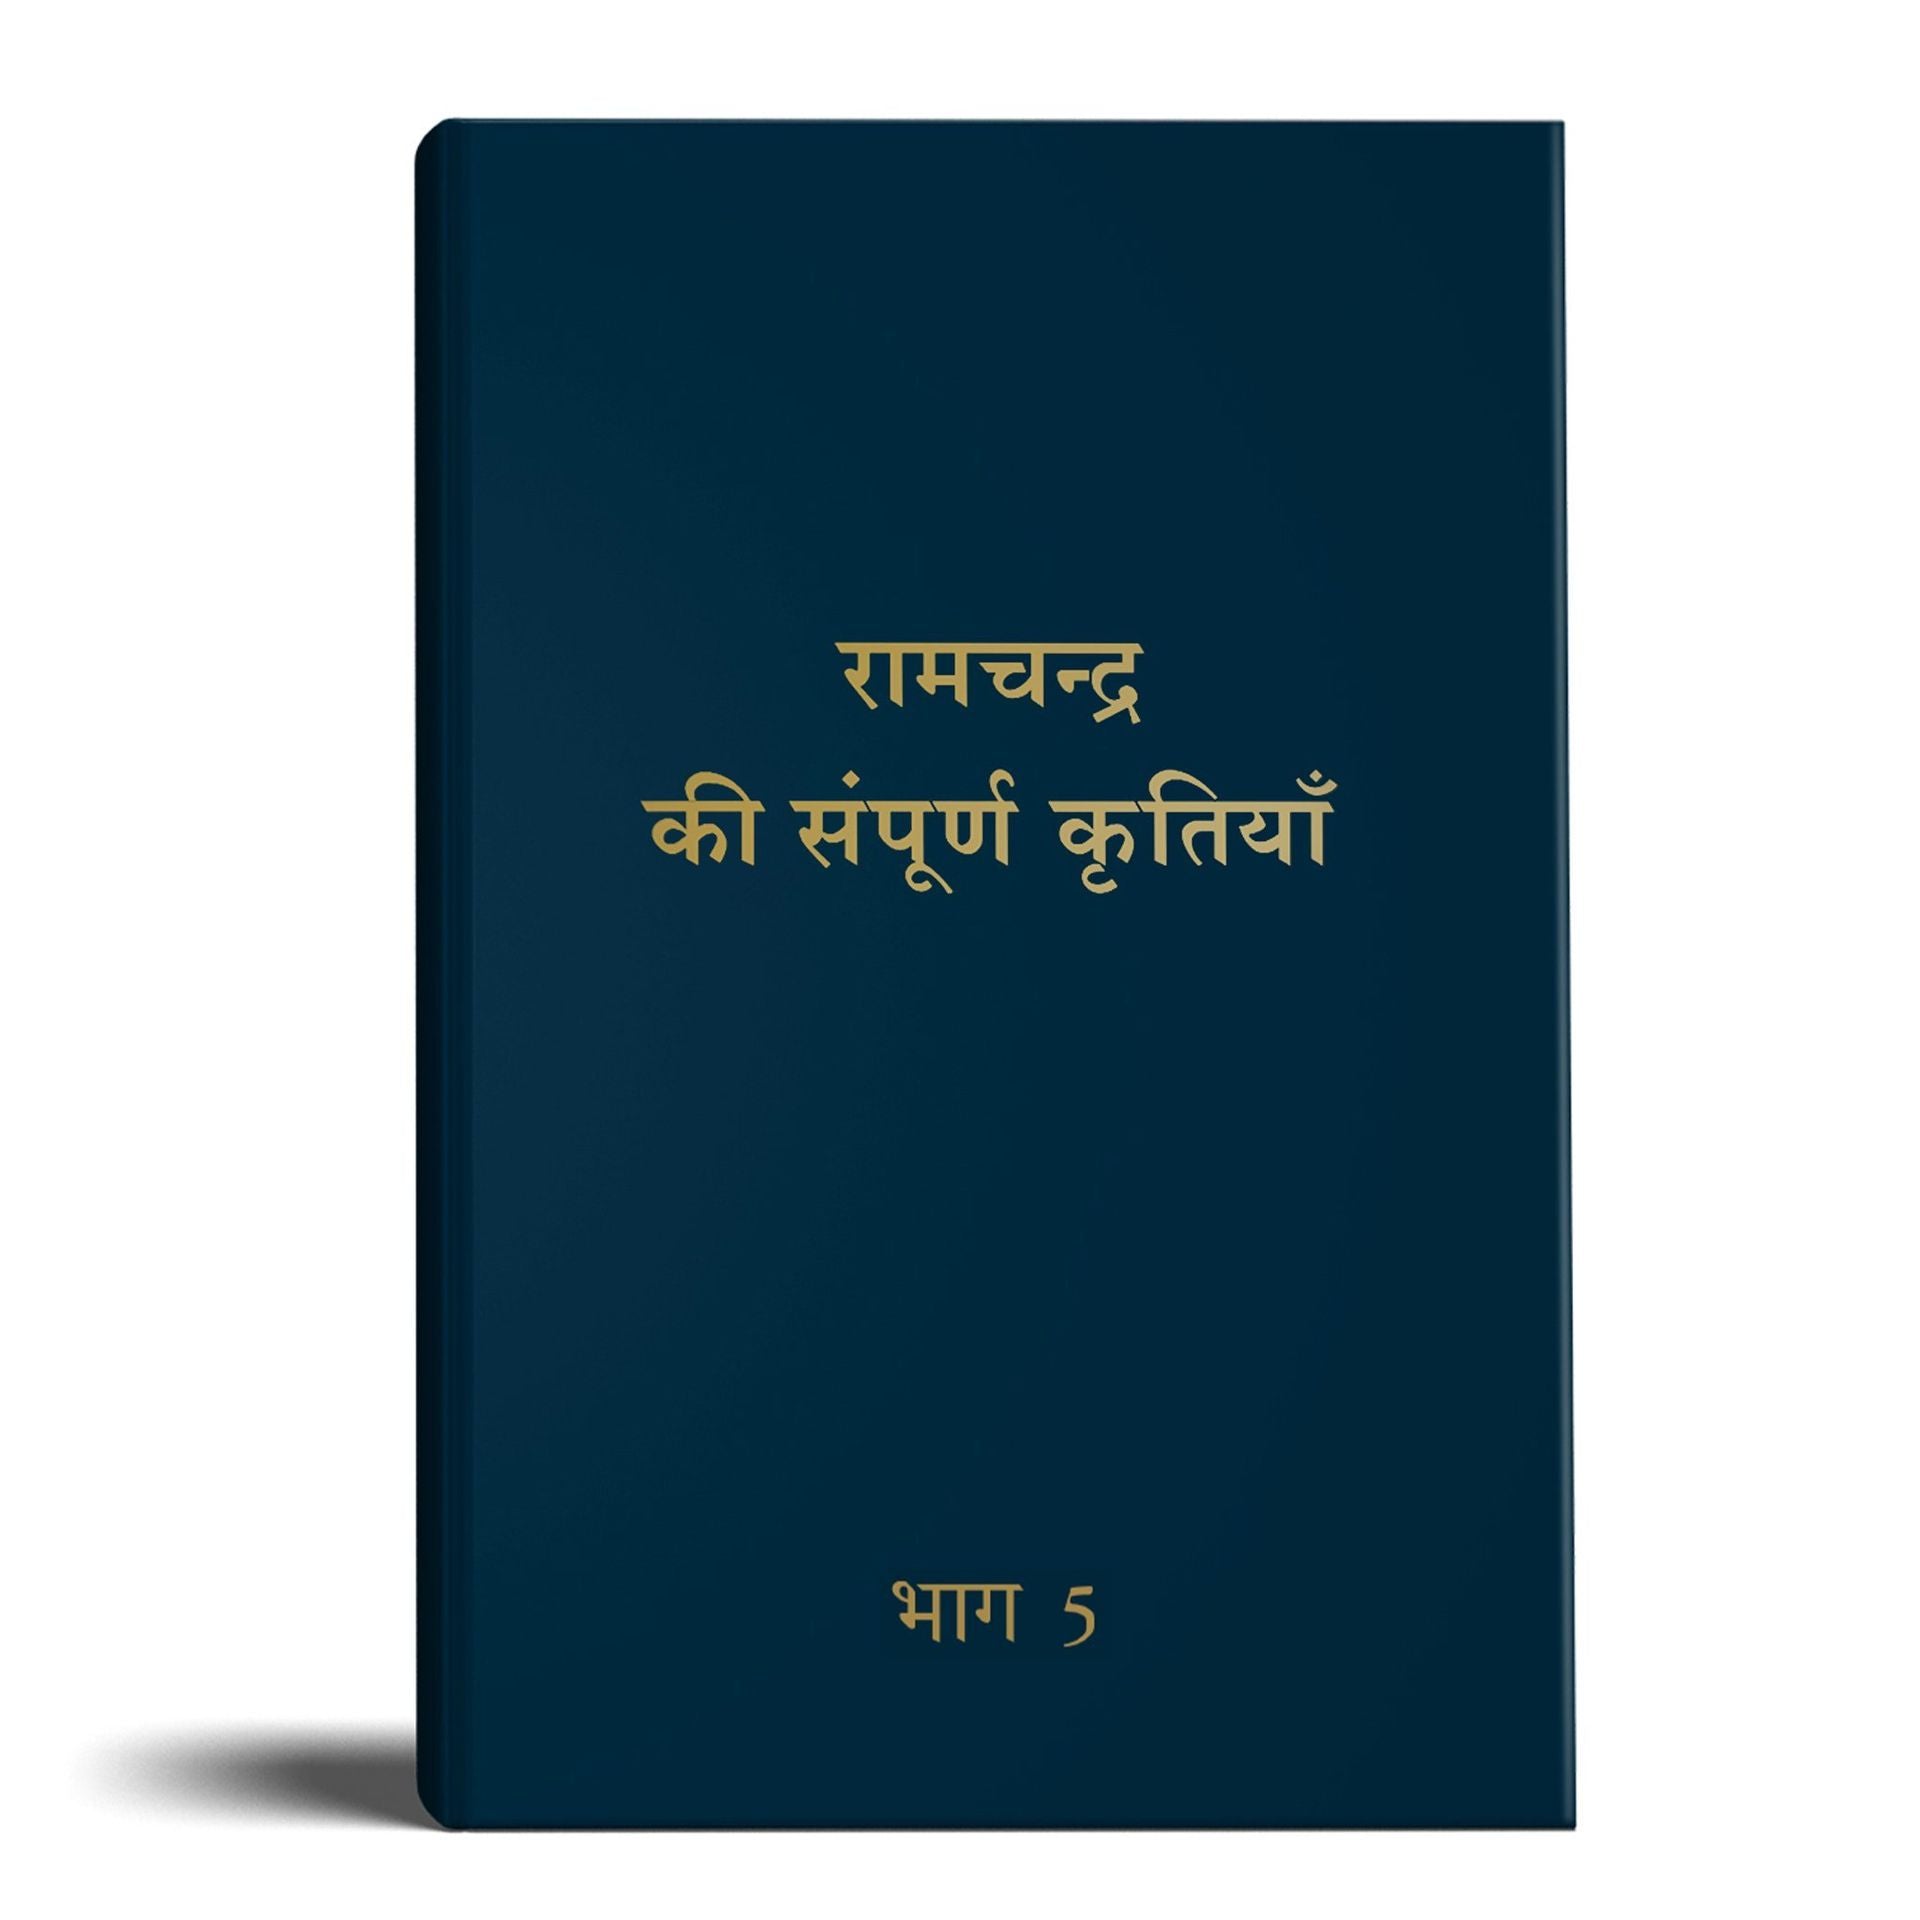 Complete Works of Ram Chandra (Babuji) - Volume 5 - hfnl!fe